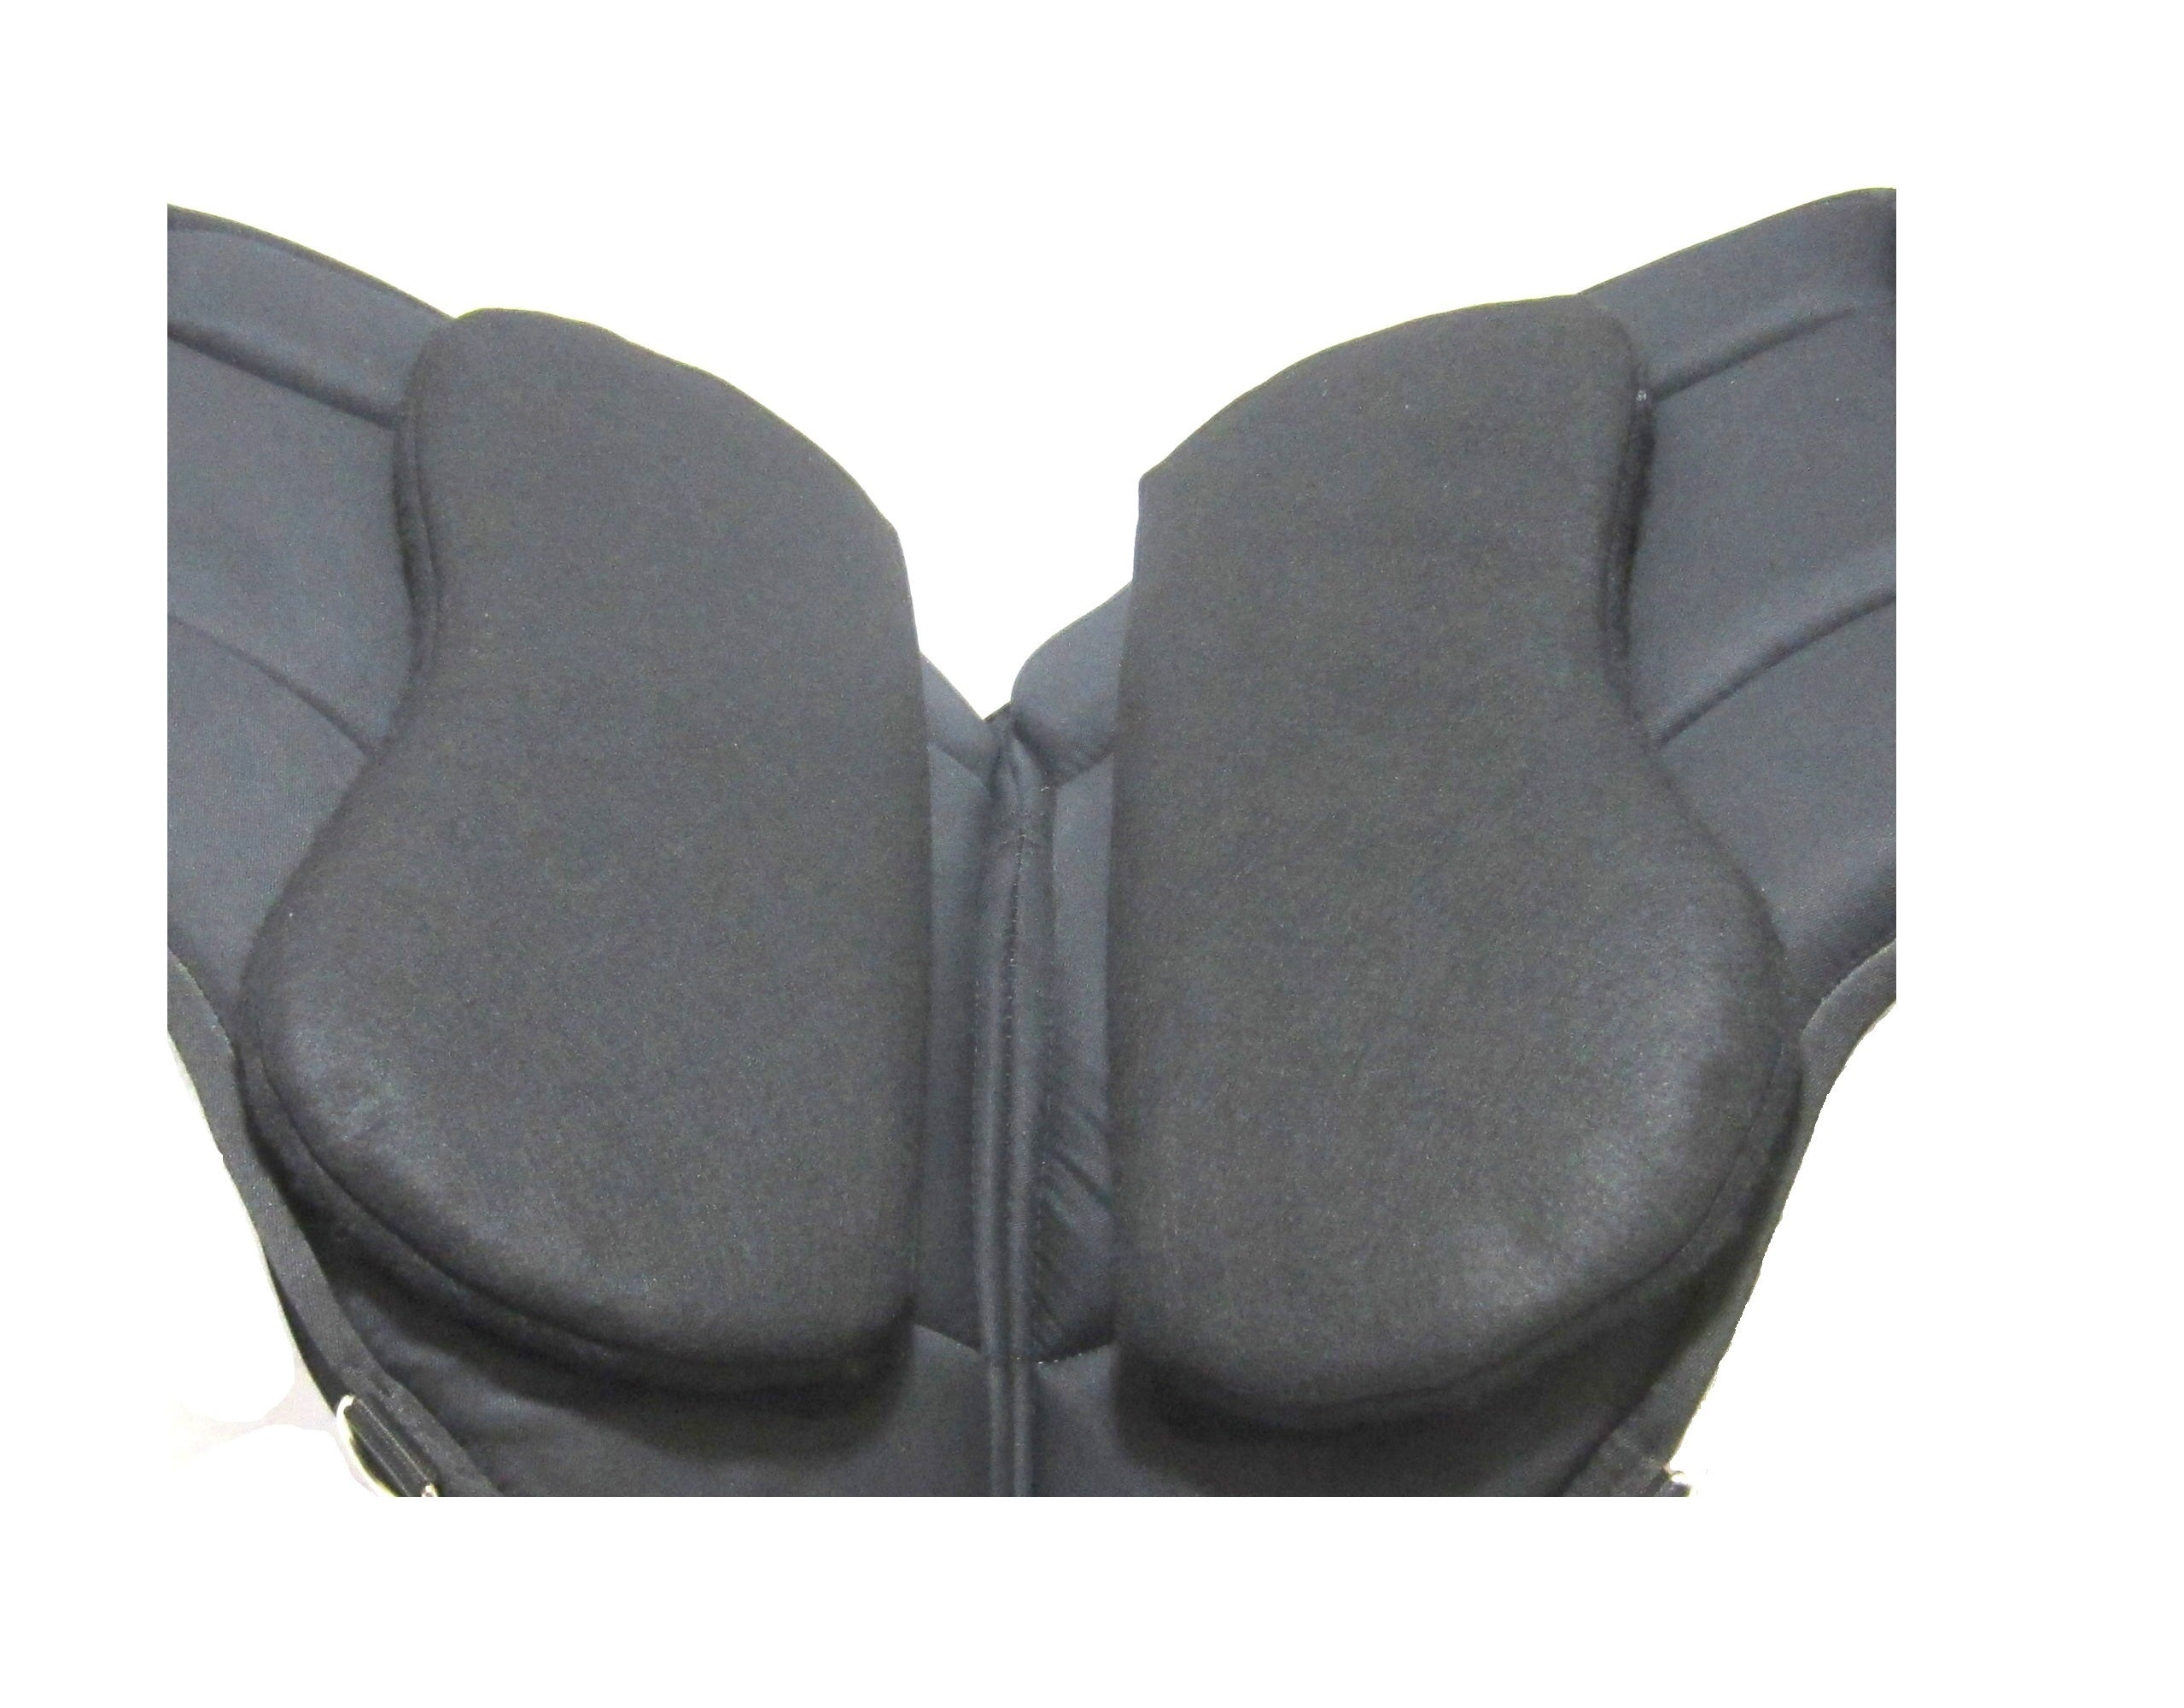 Extra narrow SLIM Velcro &amp; fillable felt cushions for flexible &amp; treeless saddles, pads - standard shape